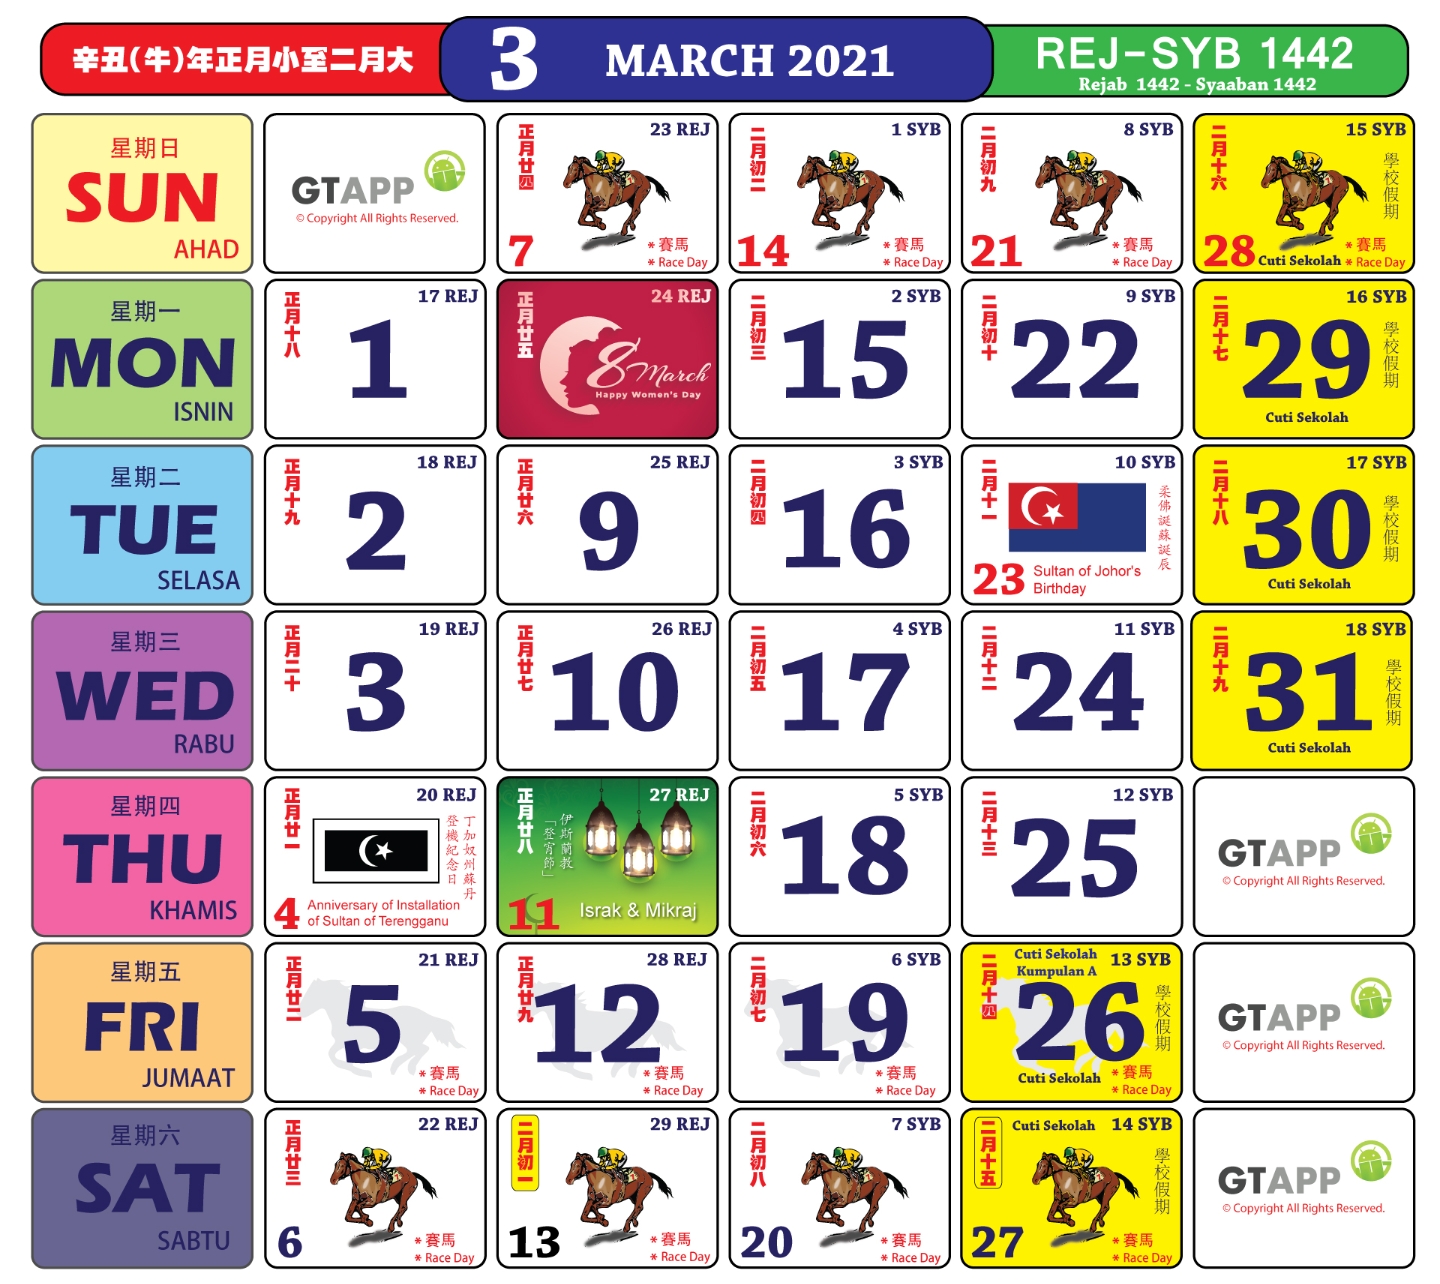 Kuda 2021 Calender Month Calendar Printable